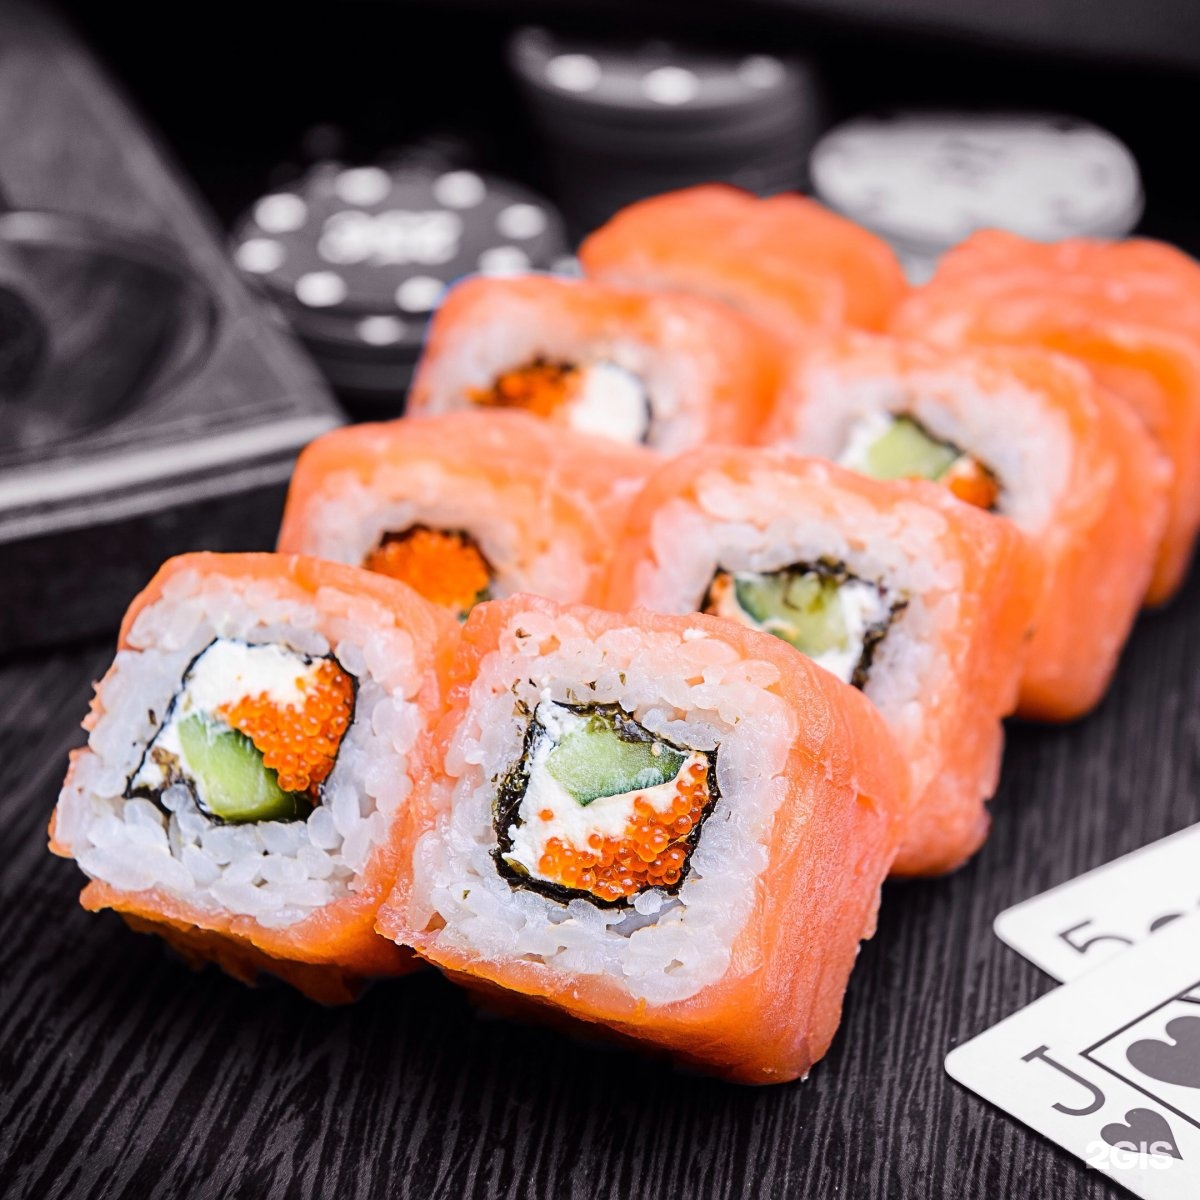 Заказать суши дешево и вкусно фото 66